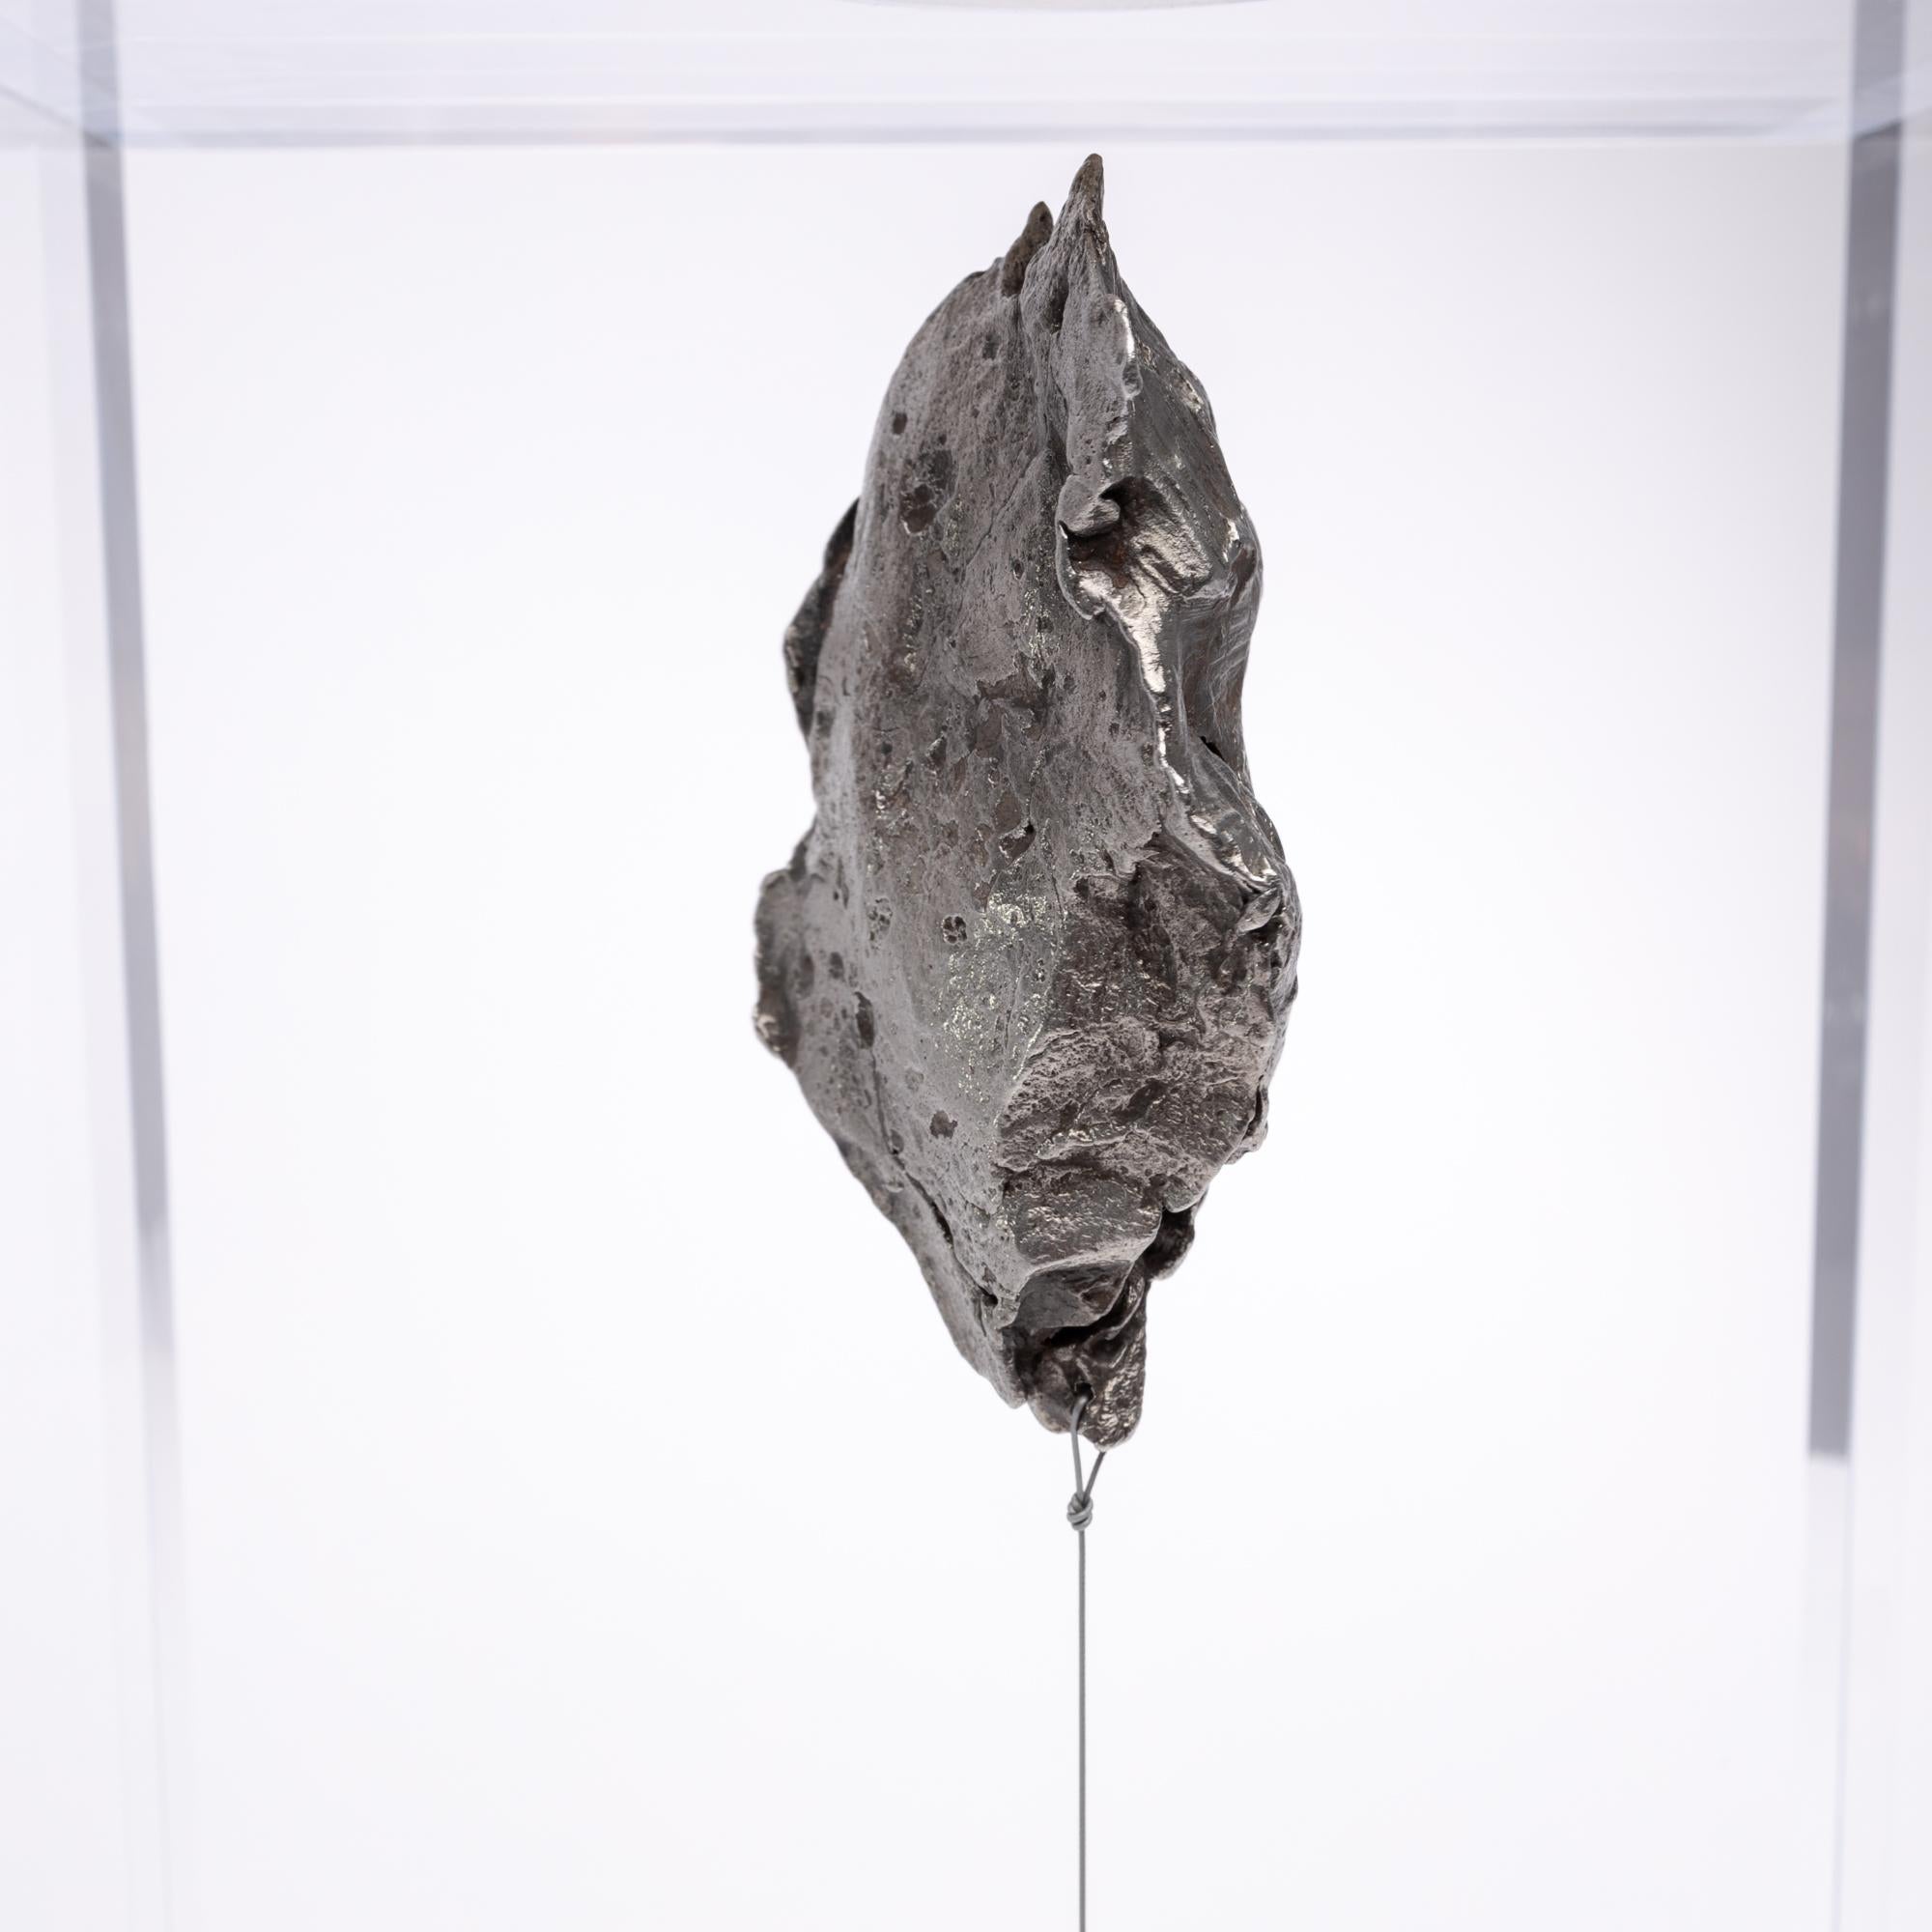 Contemporary Space Box, Russian Sikhote Alin Meteorite in Acrylic Box by Ernesto Duran